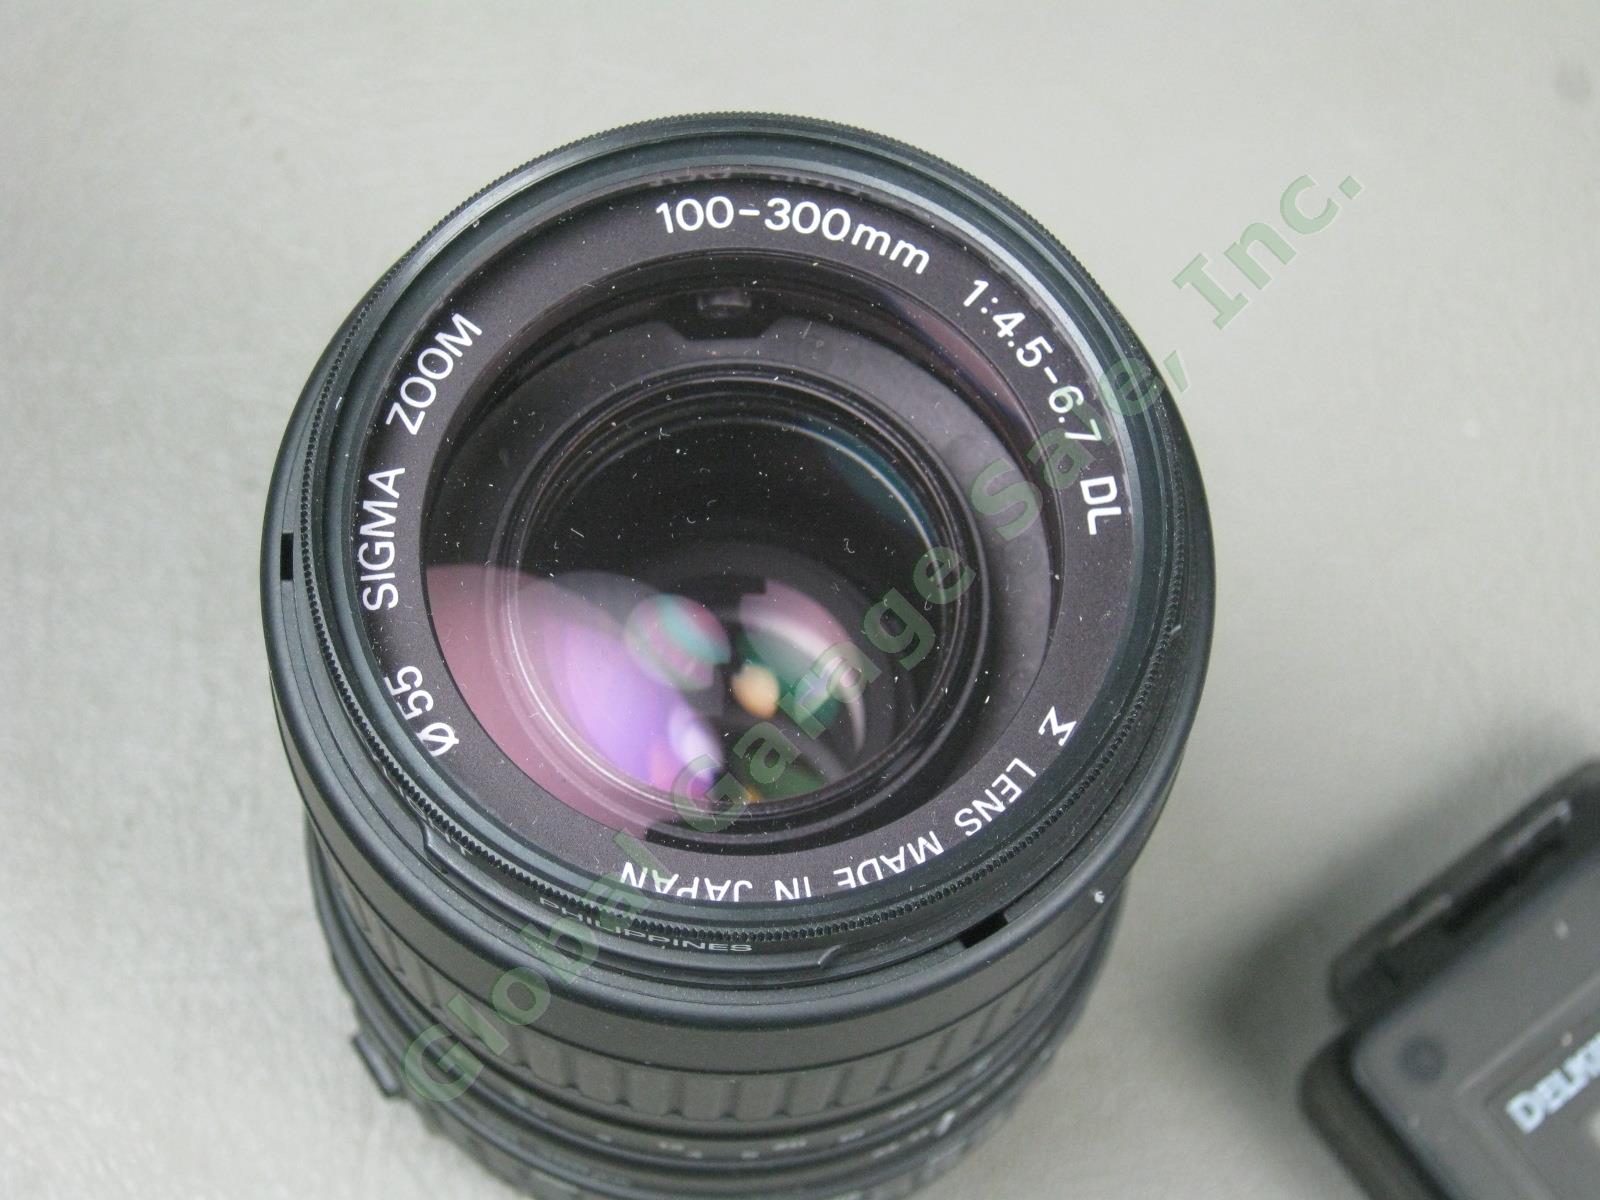 Canon EOS Digital Rebel DS6041 18-55mm 70-300mm 100-300mm Zoom Lens Case Bundle 14